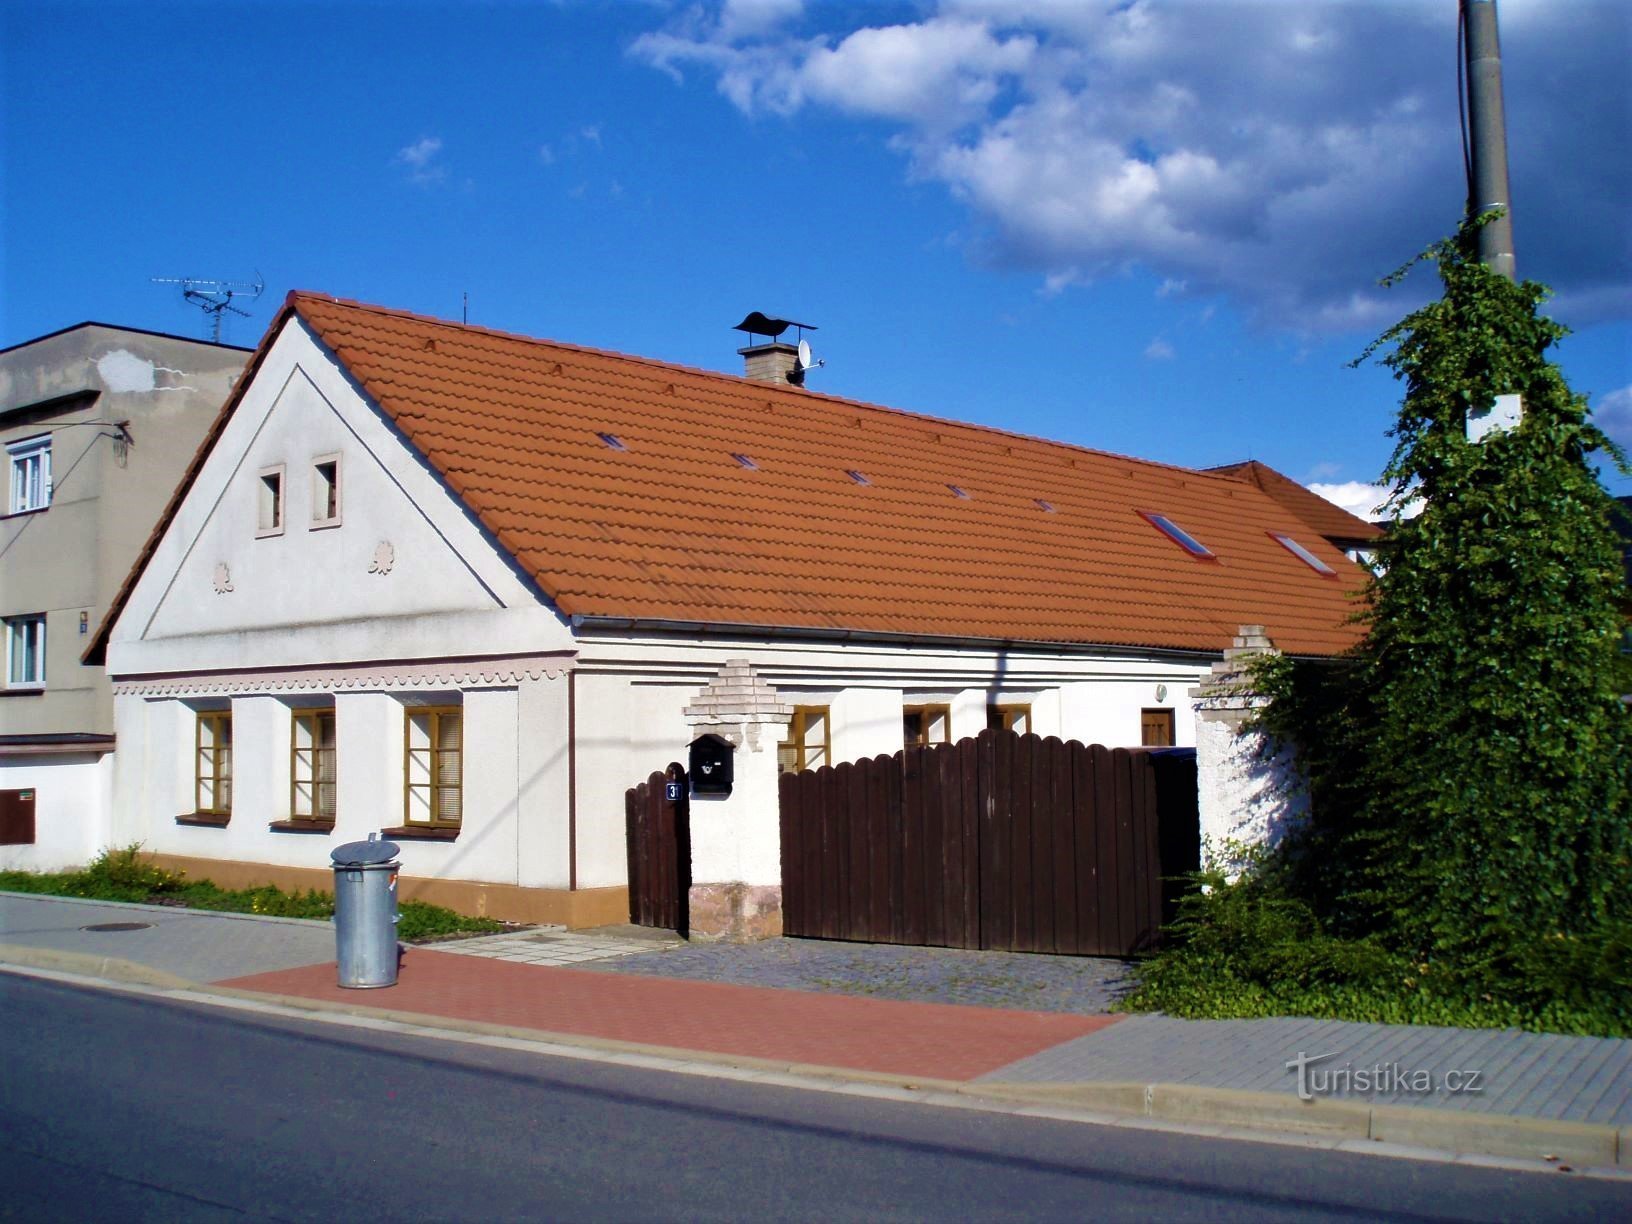 Roudničská nr. 1 (Hradec Králové, 16.9.2010)